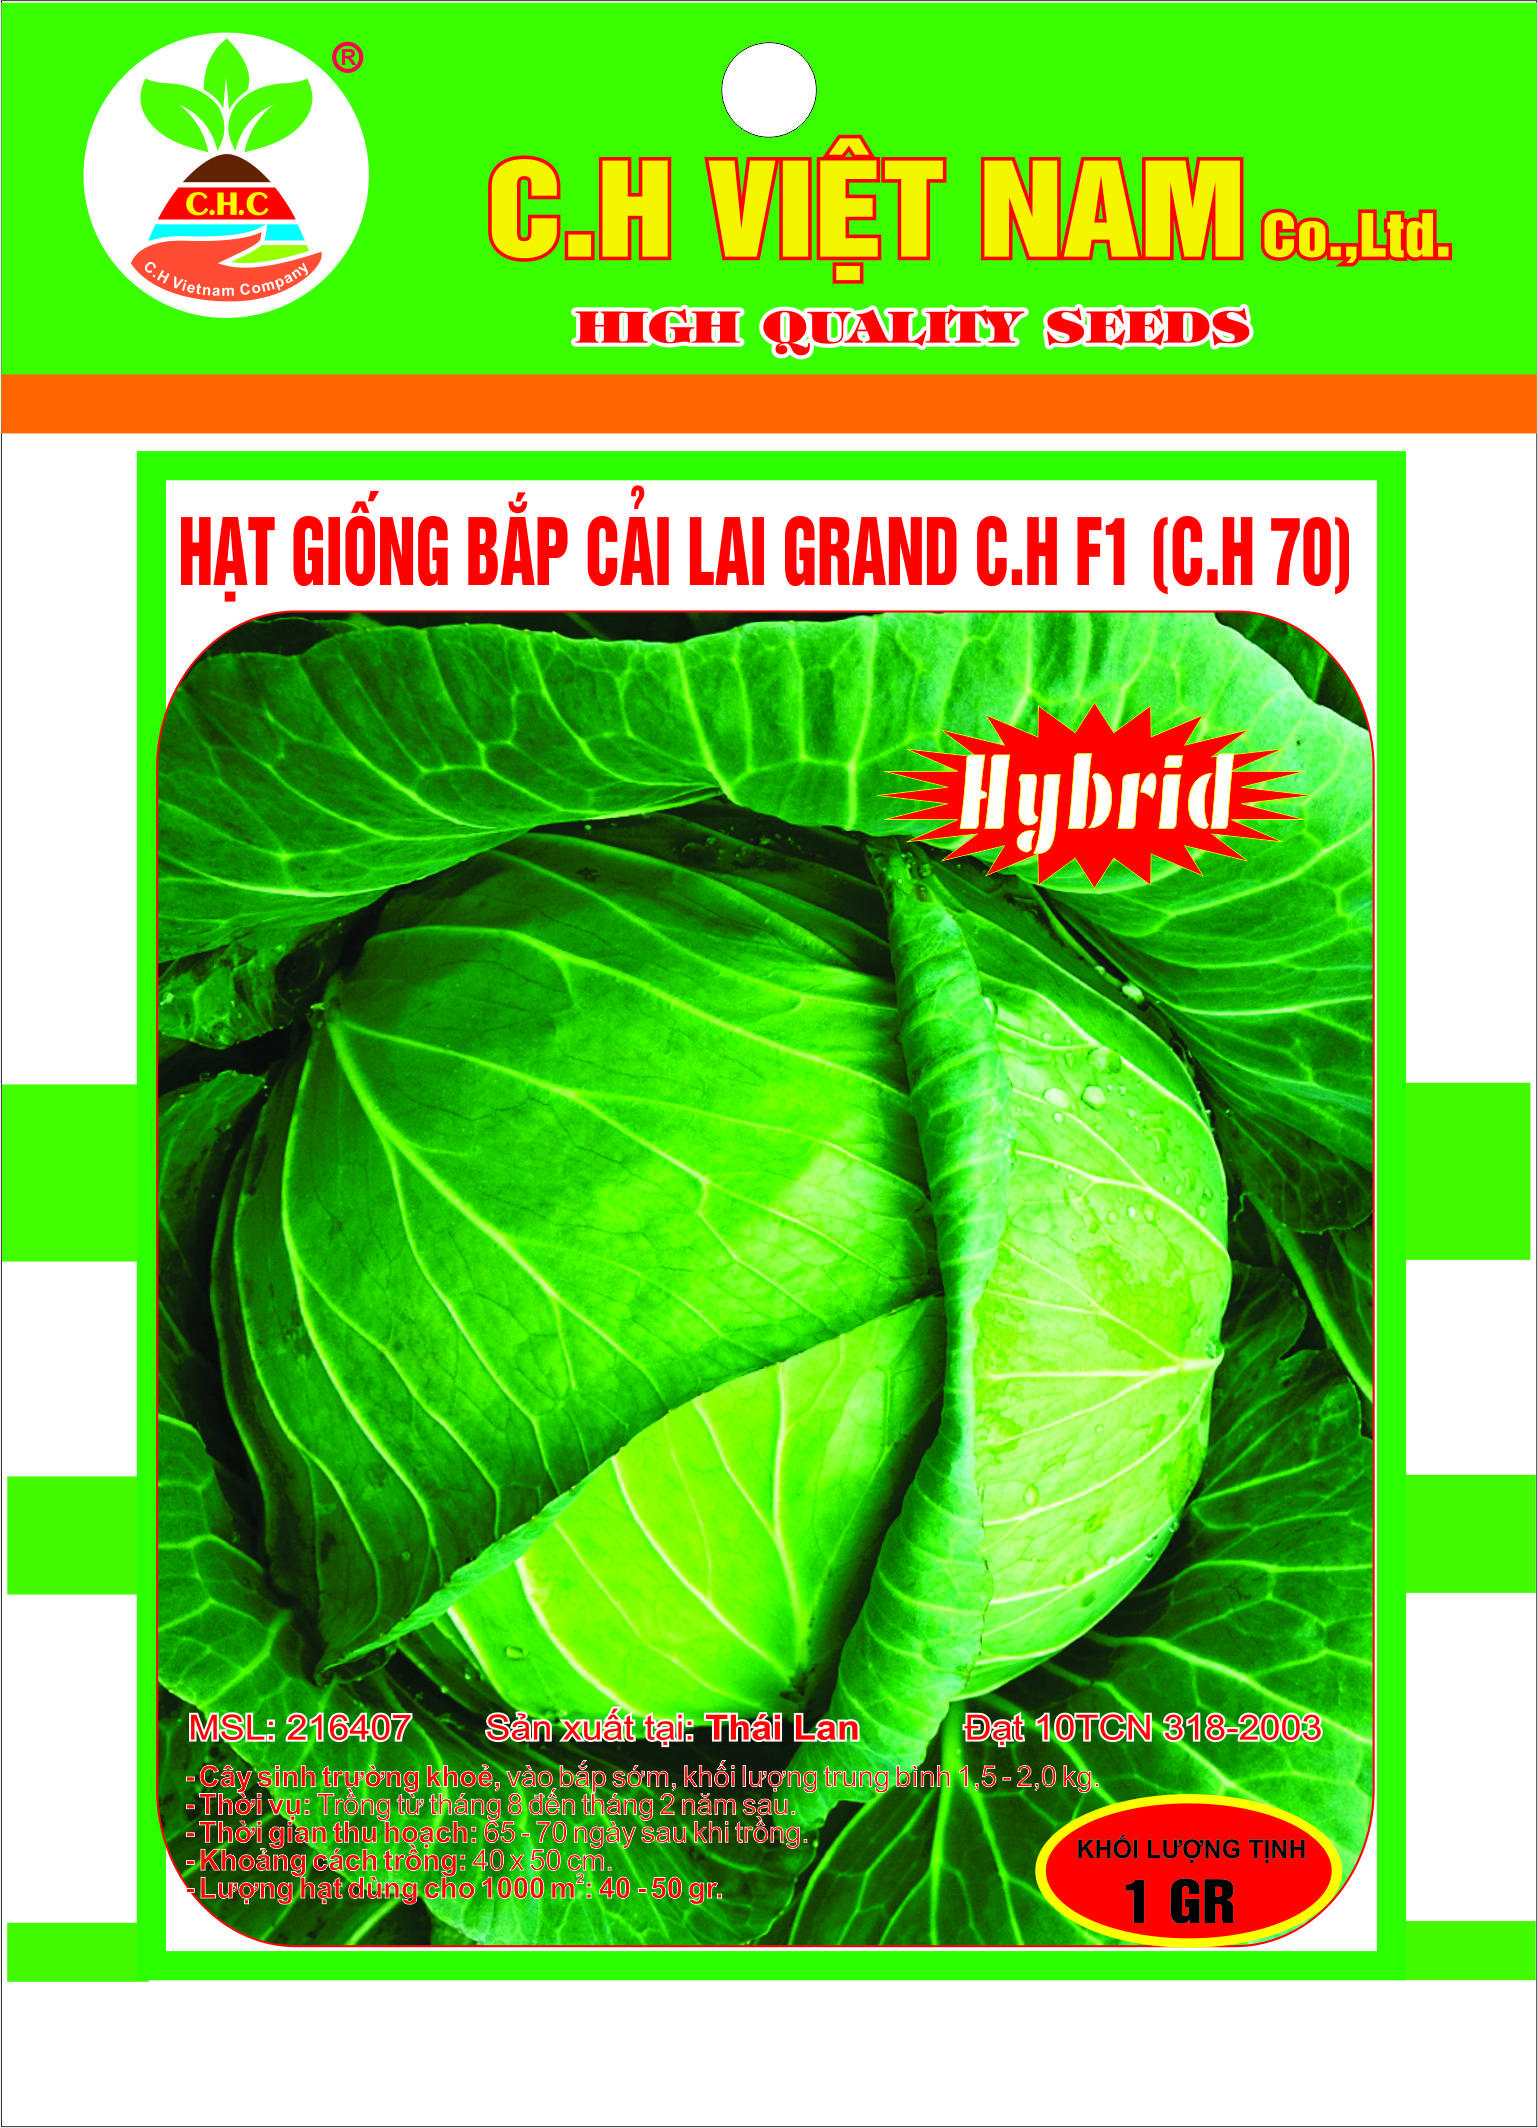 Grand C.H F1 hybrid cabbage seeds />
                                                 		<script>
                                                            var modal = document.getElementById(